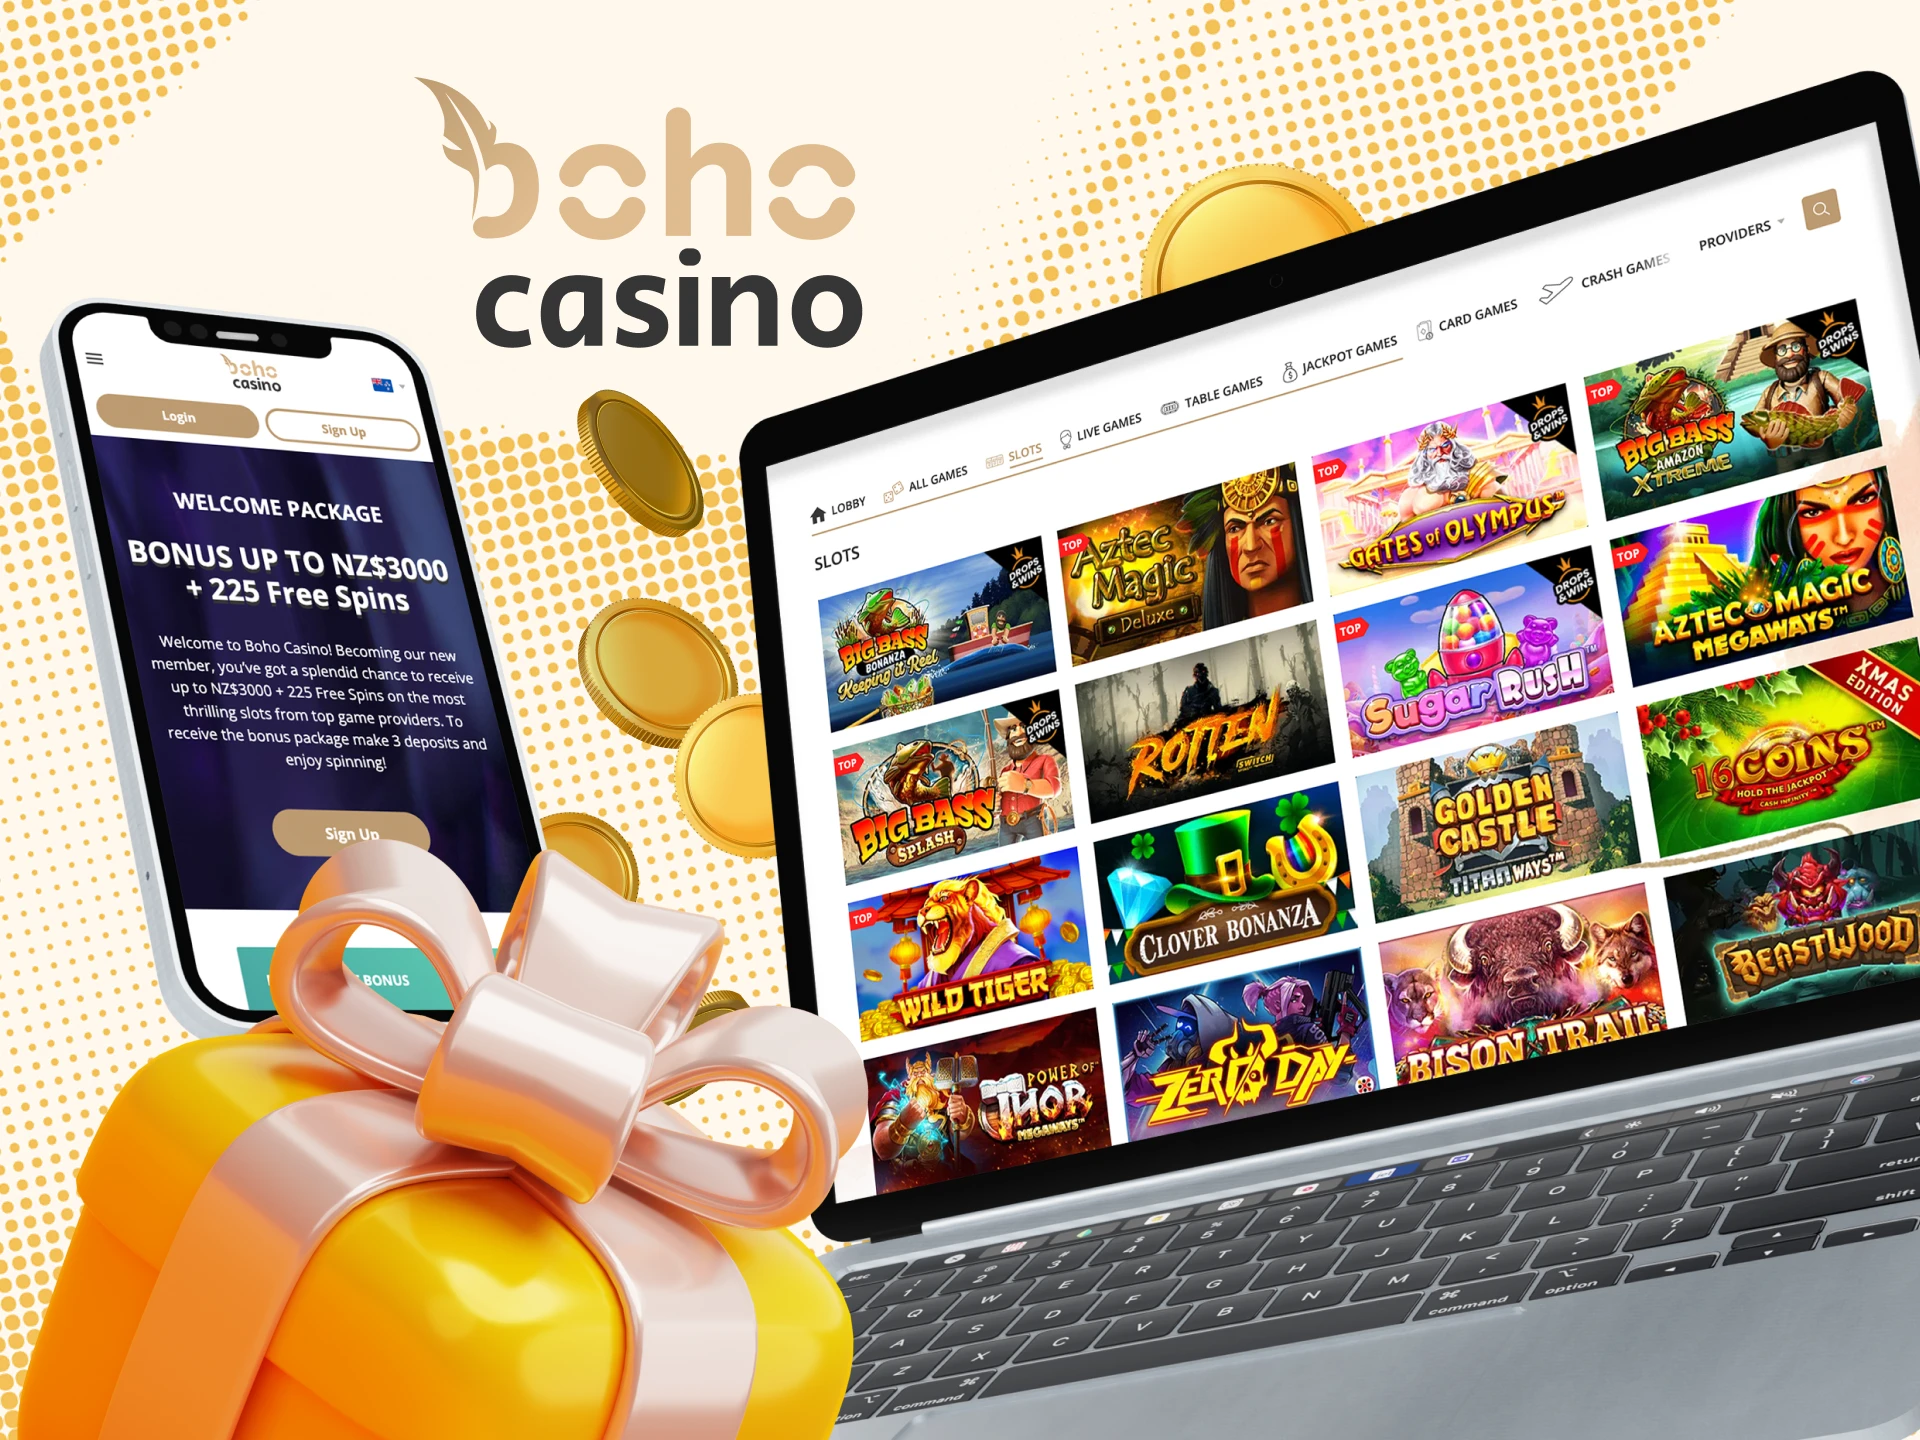 Boho Casino offers generous bonuses for slots.